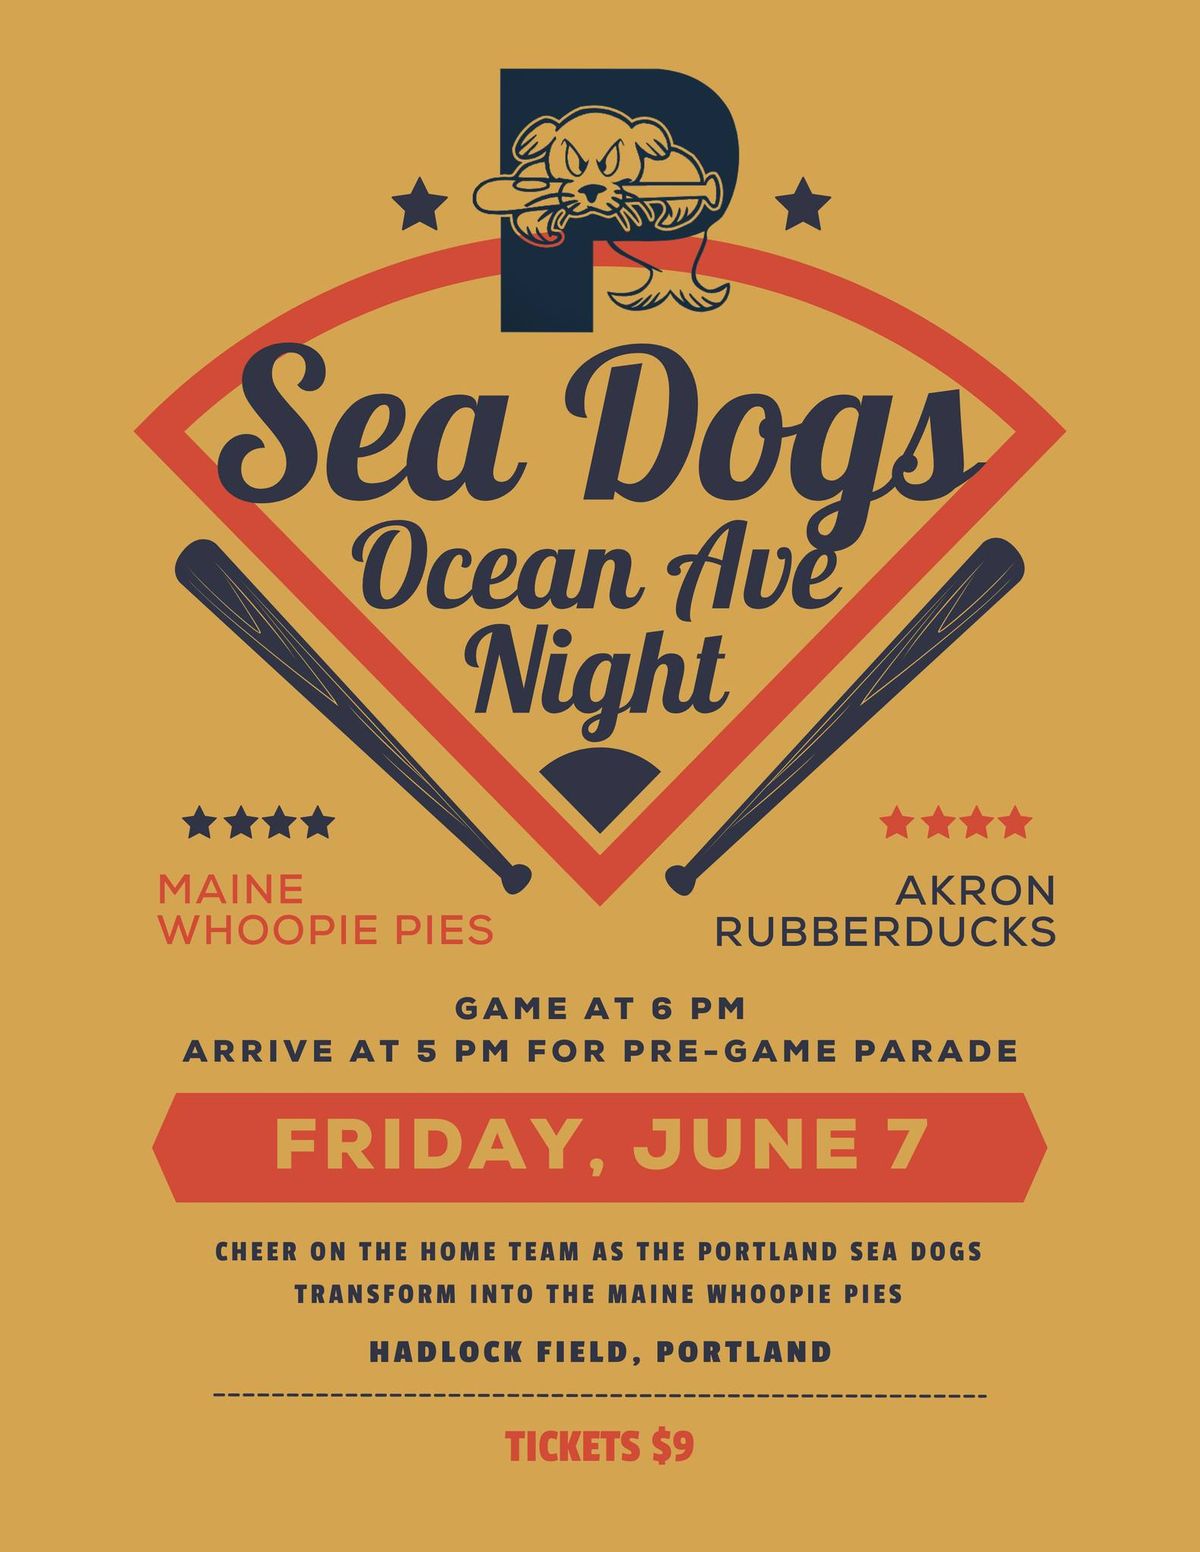 Portland Sea Dogs Ocean Ave Night!